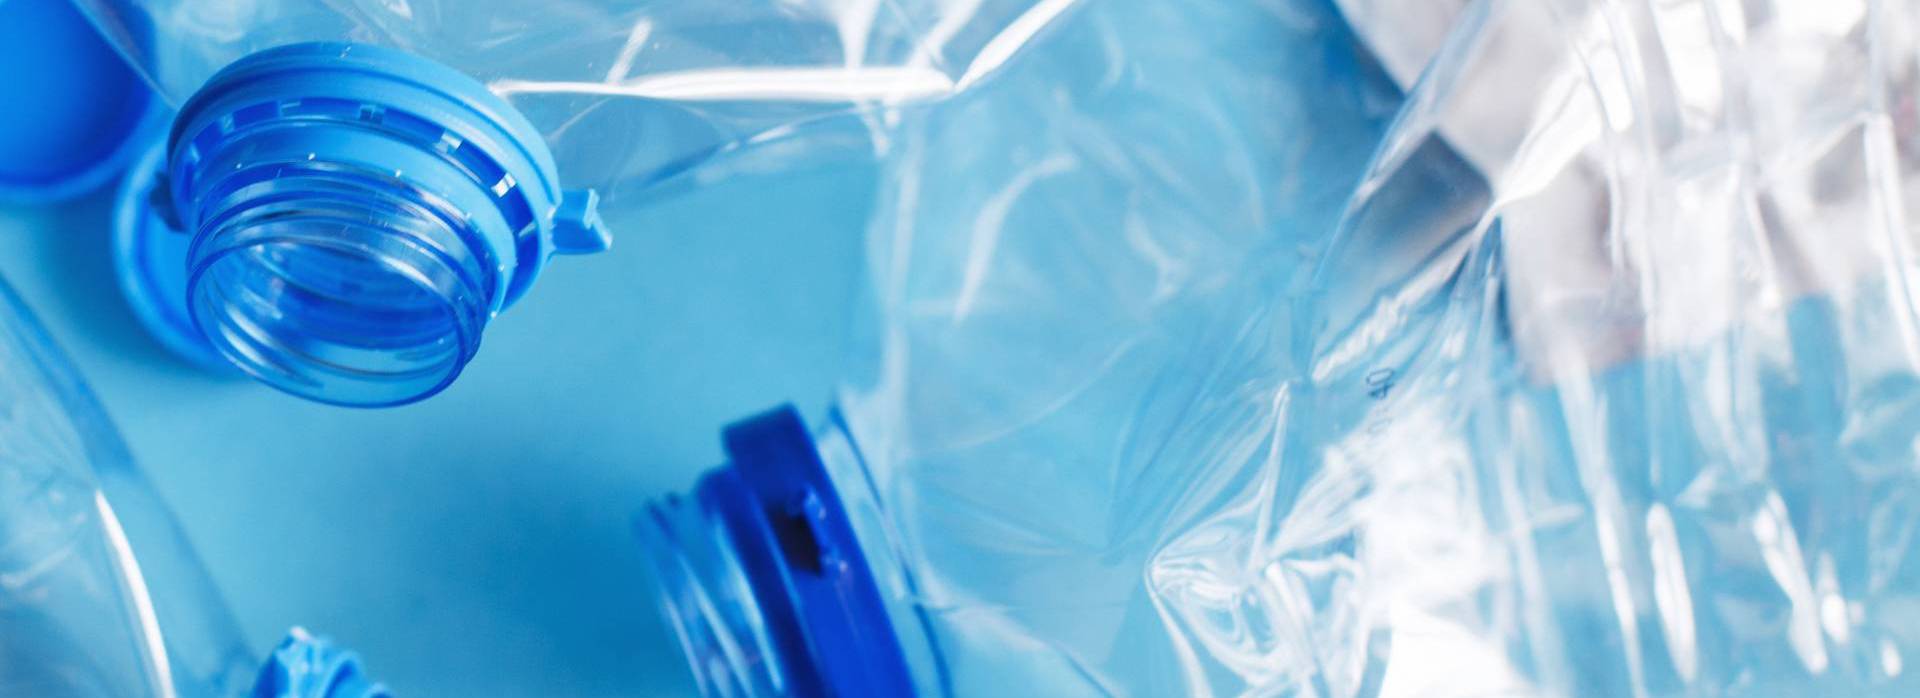 Plastikflaschen Plastikrecycling / Bild: colourbox.de